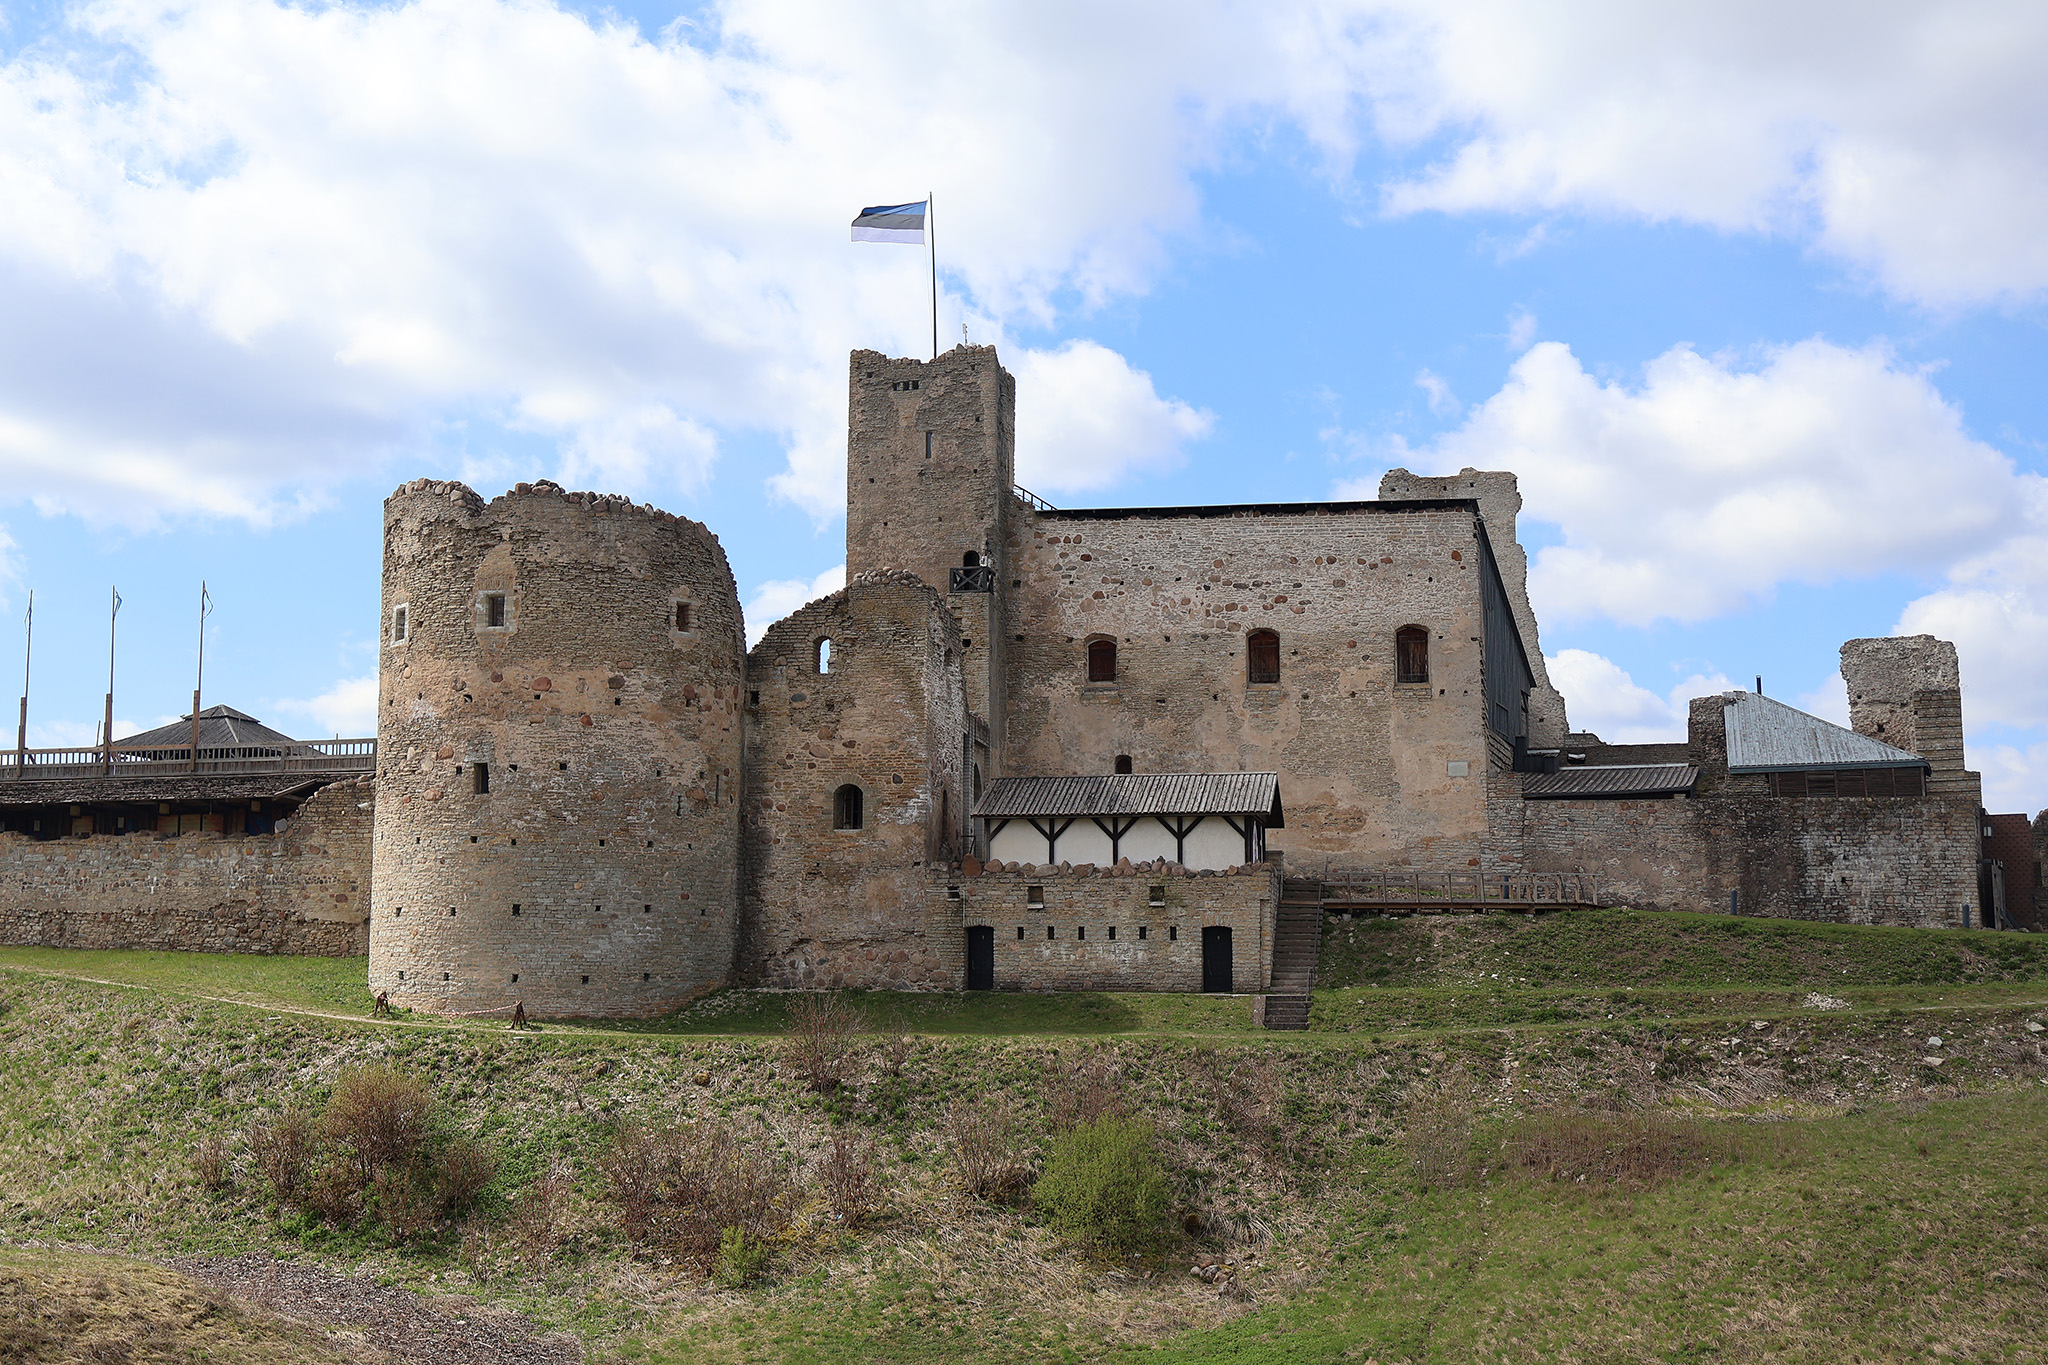 Tallinn Part 2: Rakvere Castle and a Bit of Shopping